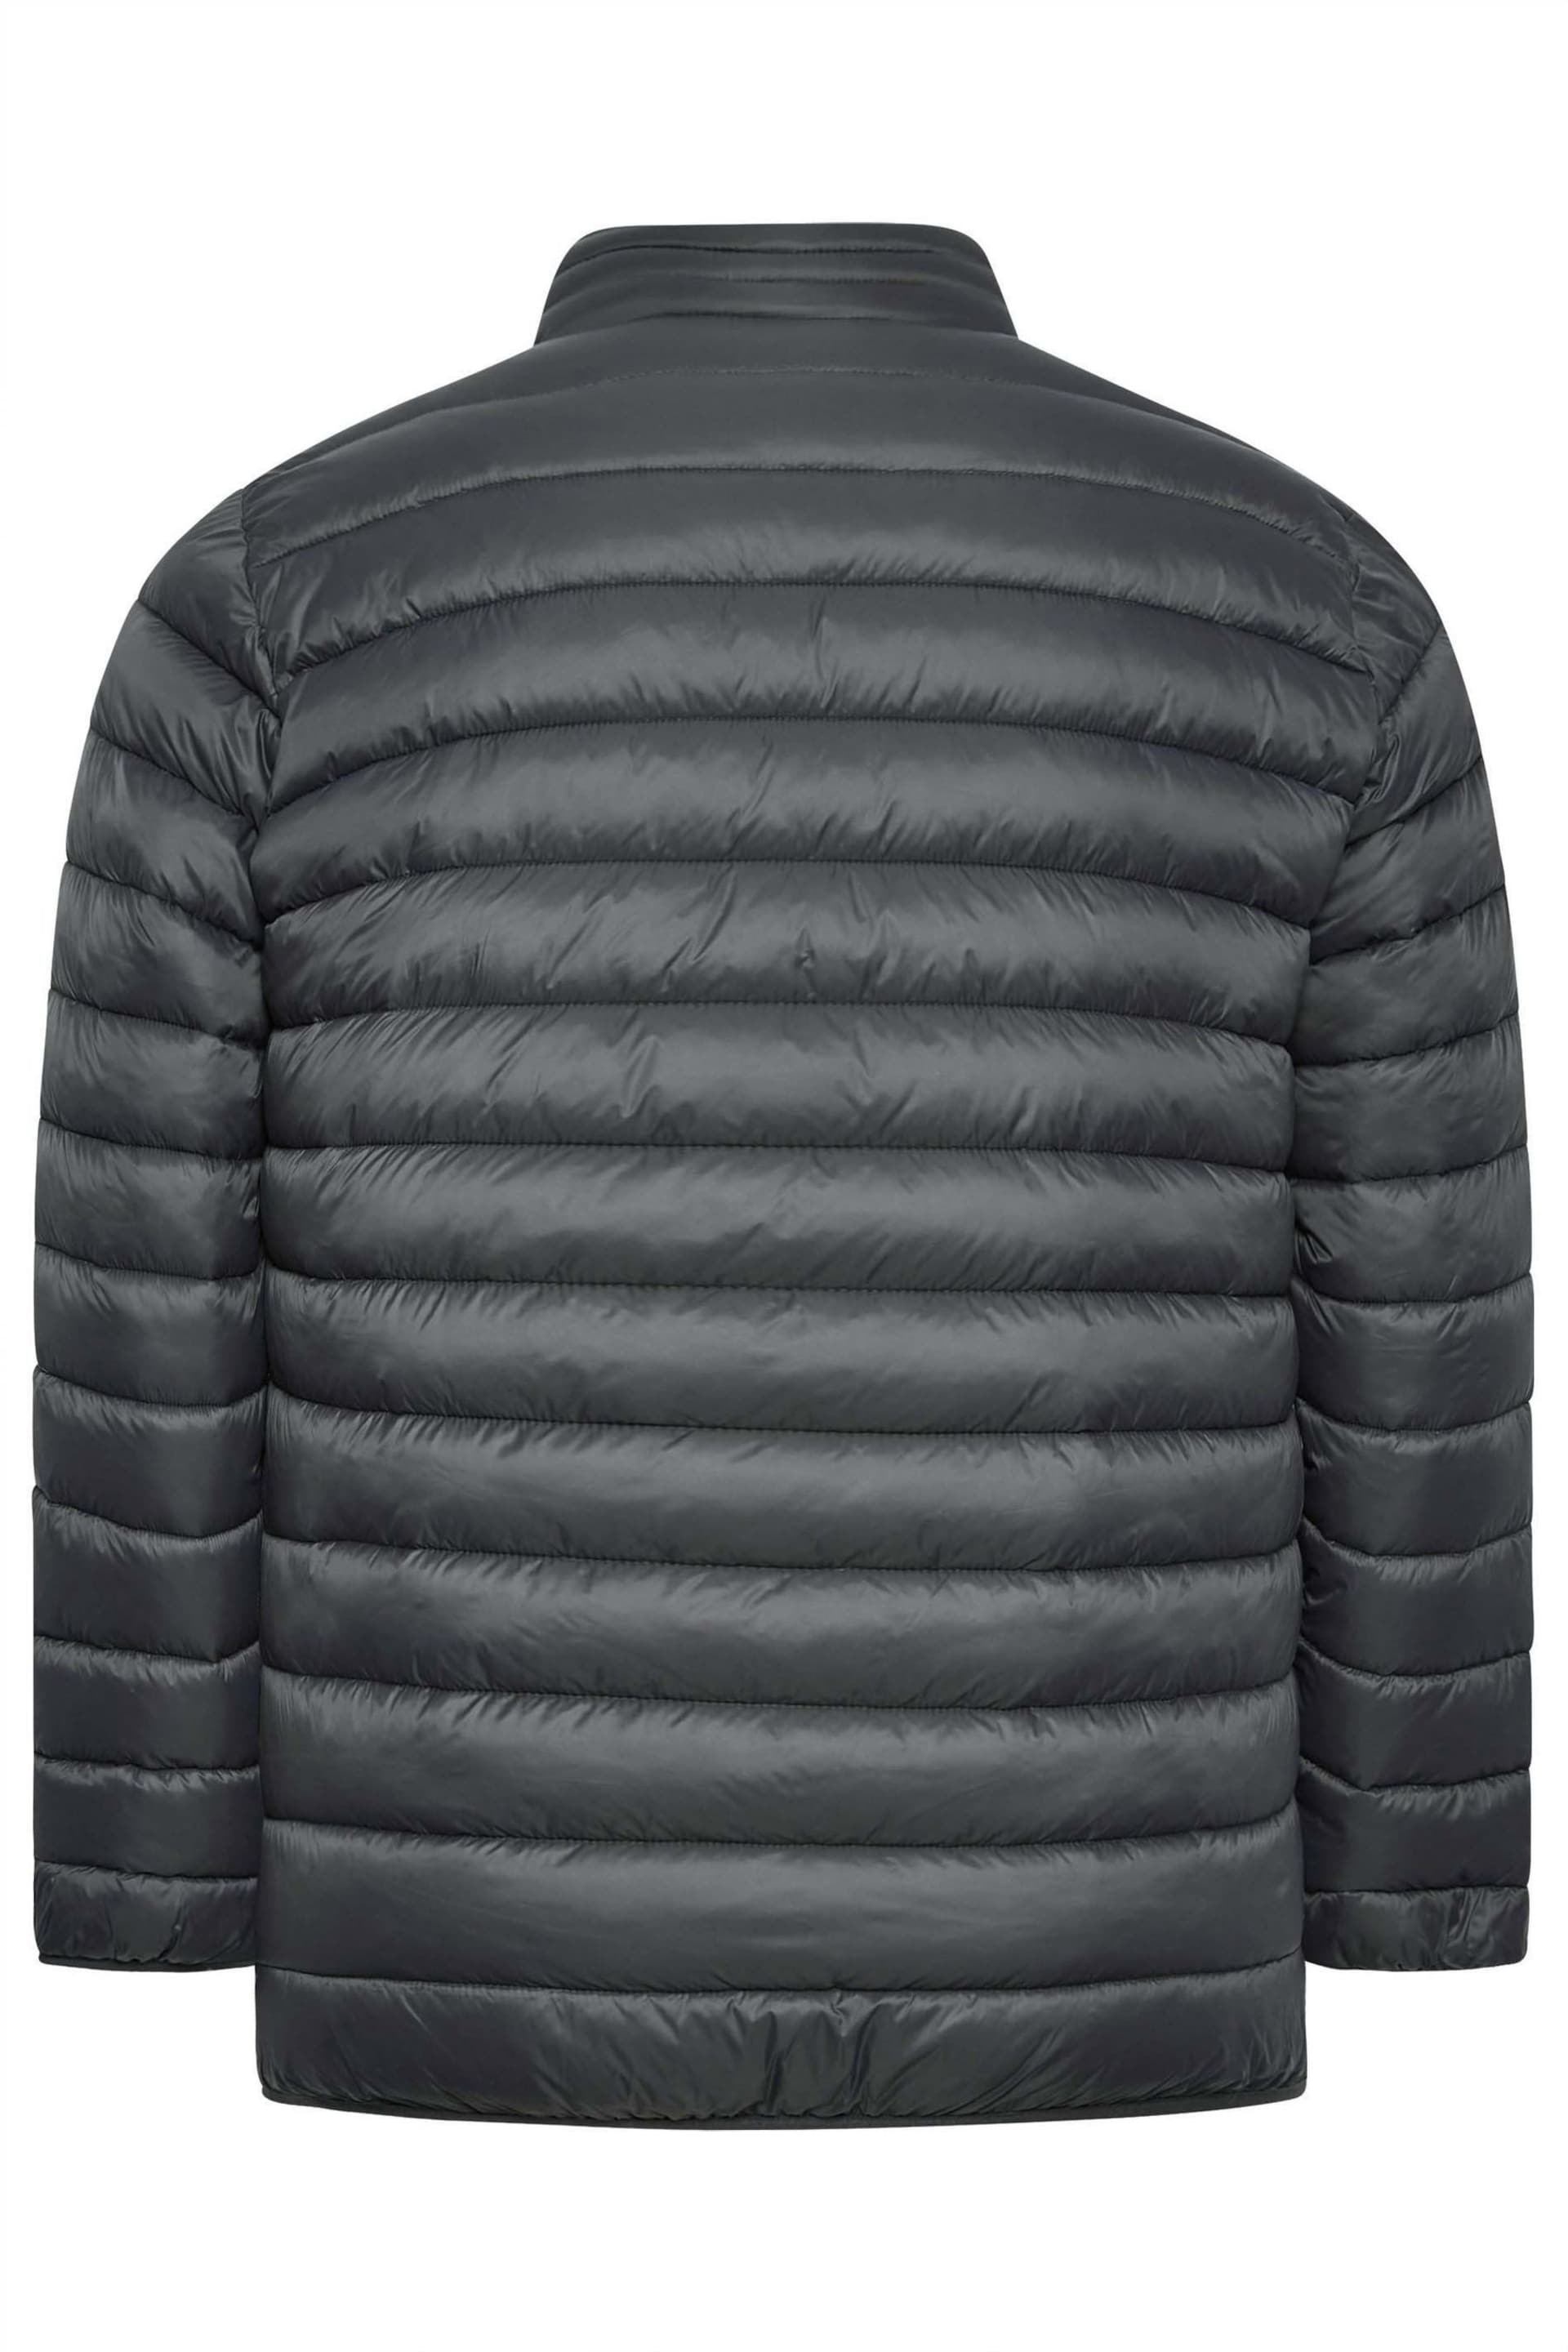 BadRhino Big & Tall Black Padded Collar Coat - Image 4 of 4